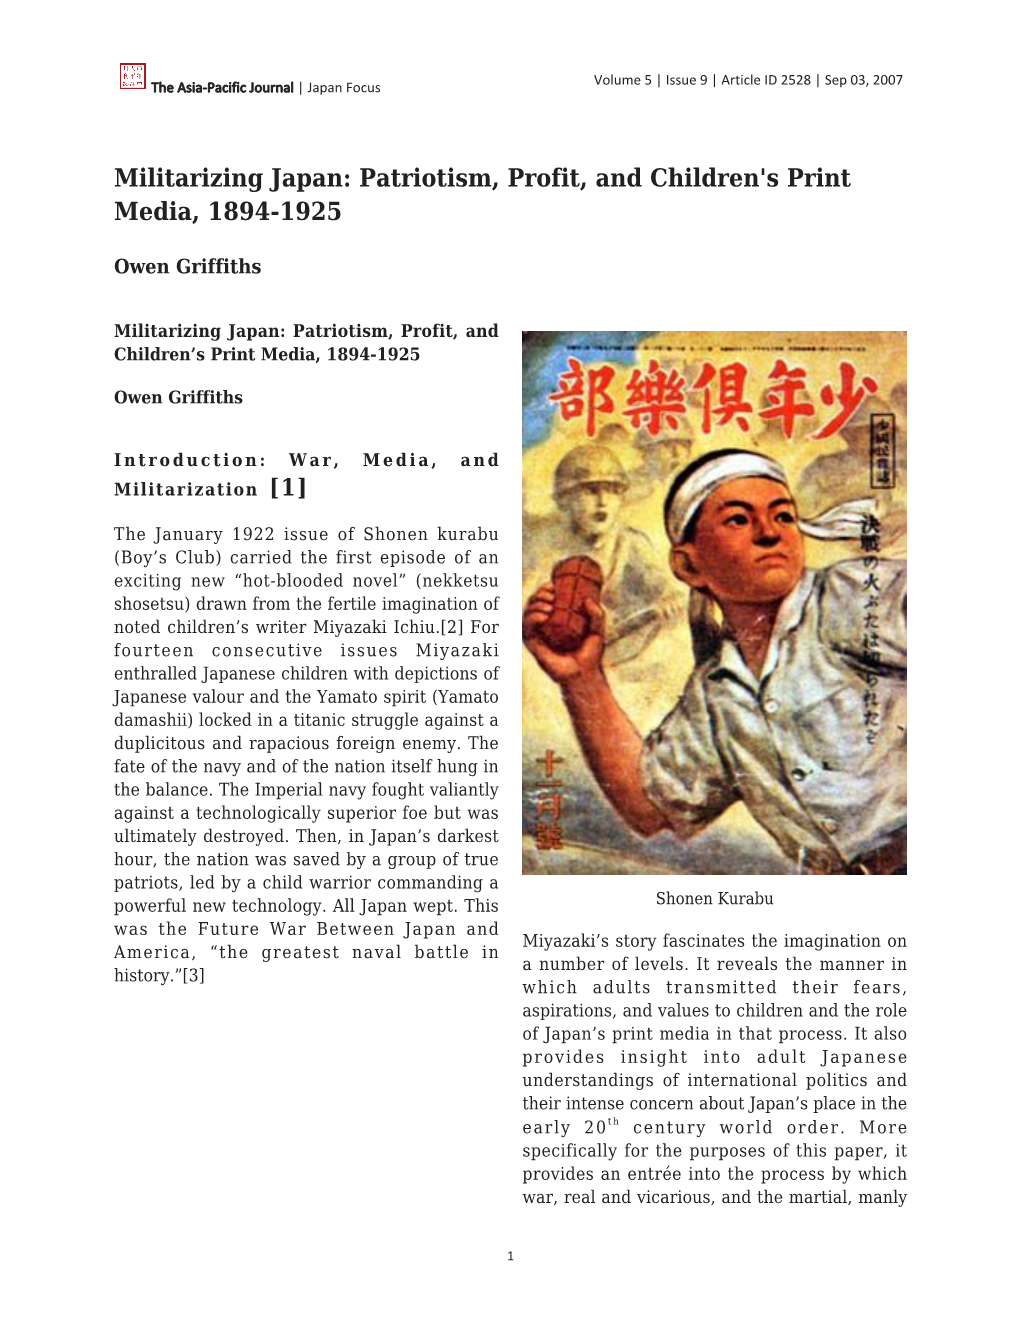 Militarizing Japan: Patriotism, Profit, and Children's Print Media, 1894-1925